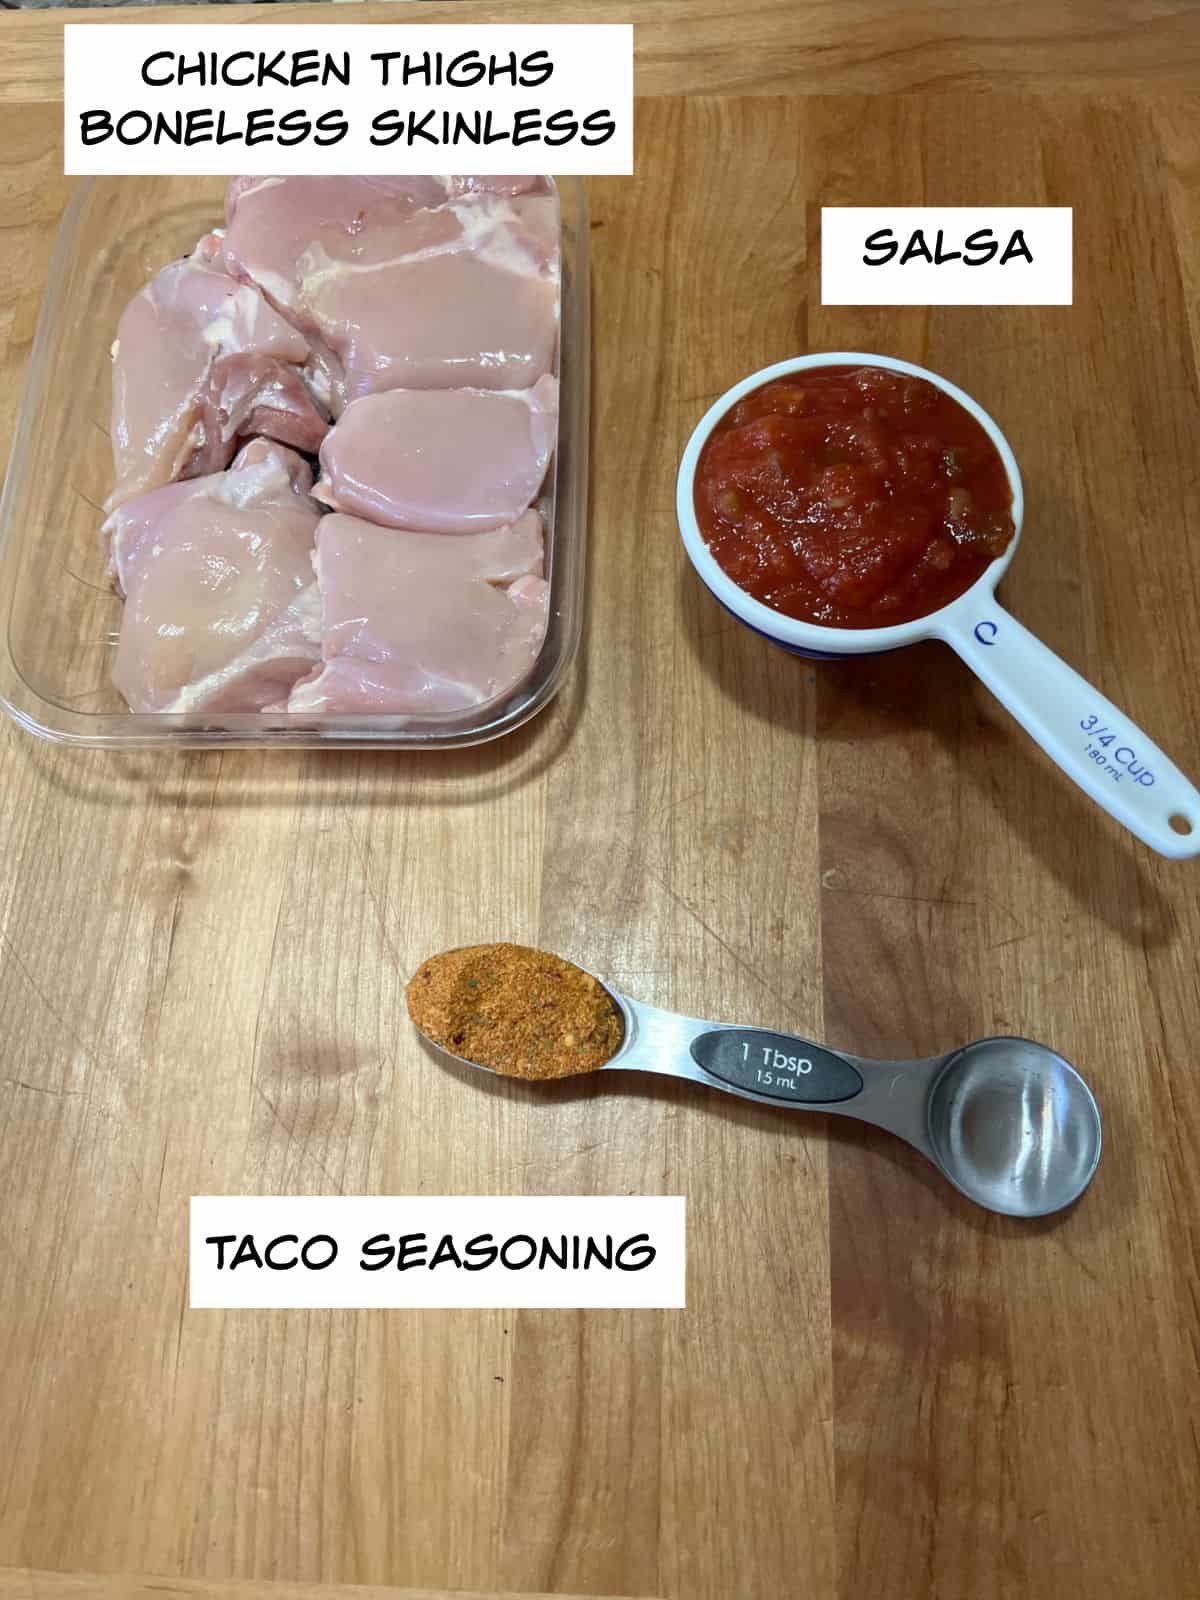 ingredients: chicken, taco seasoning, and salsa.